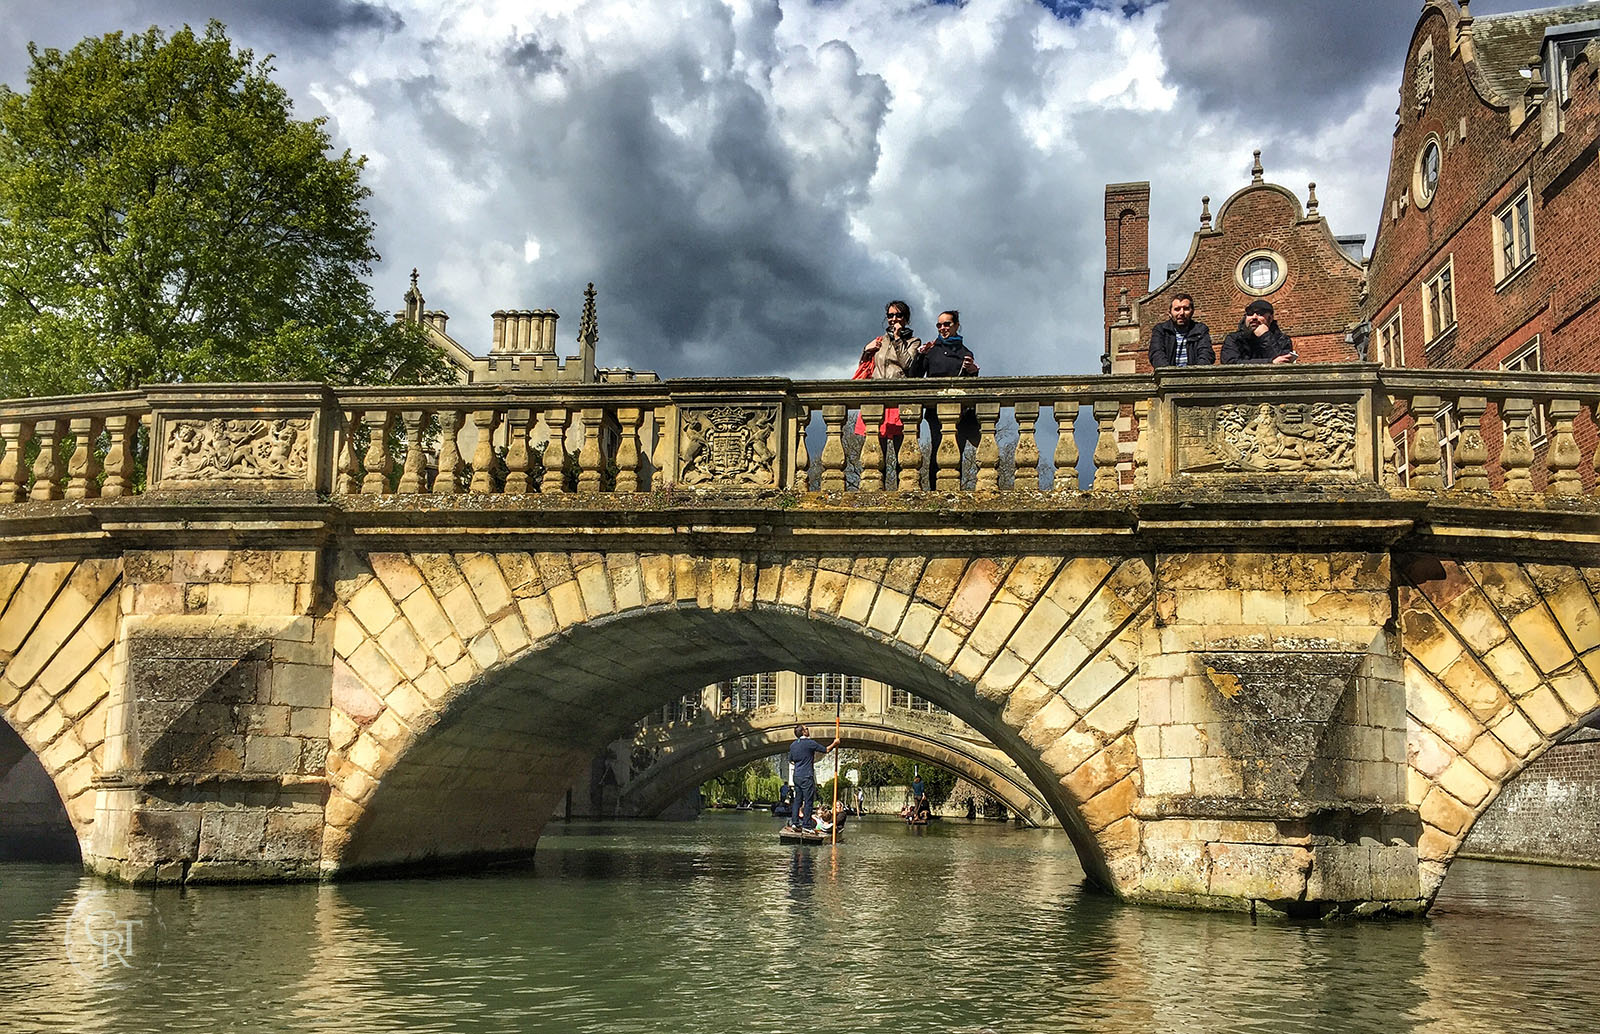 Kitchen bridge, Cambridge